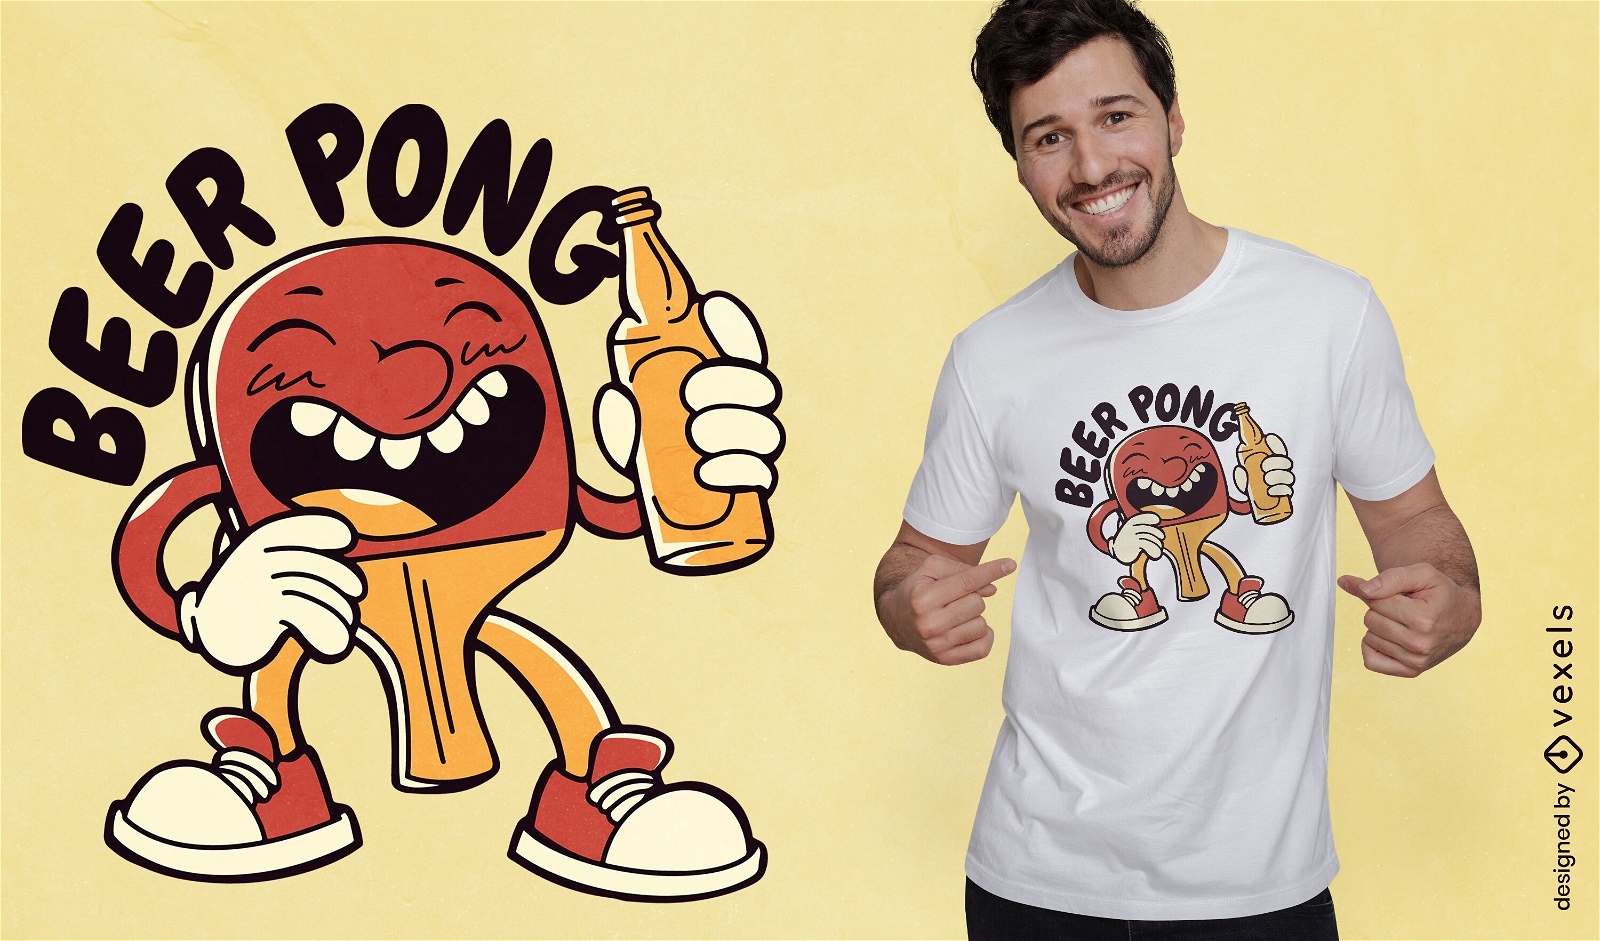 Diseño de camiseta de personaje de dibujos animados de cerveza pong